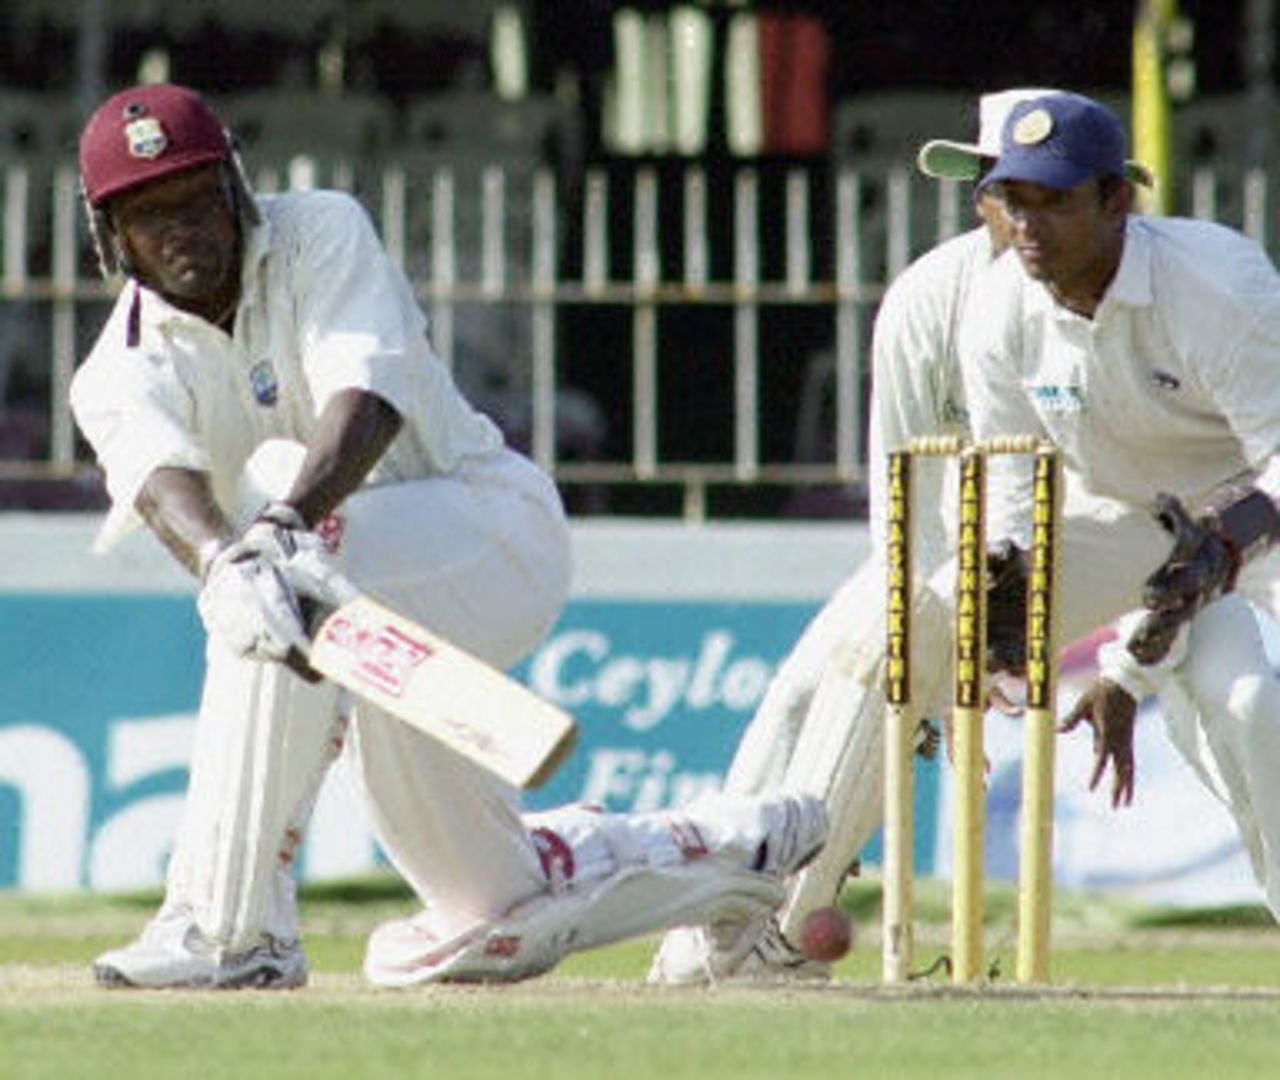 West indies skipper Carl Hooper sweeps a ball as wicket keeper Kumar Sangakkara looks on